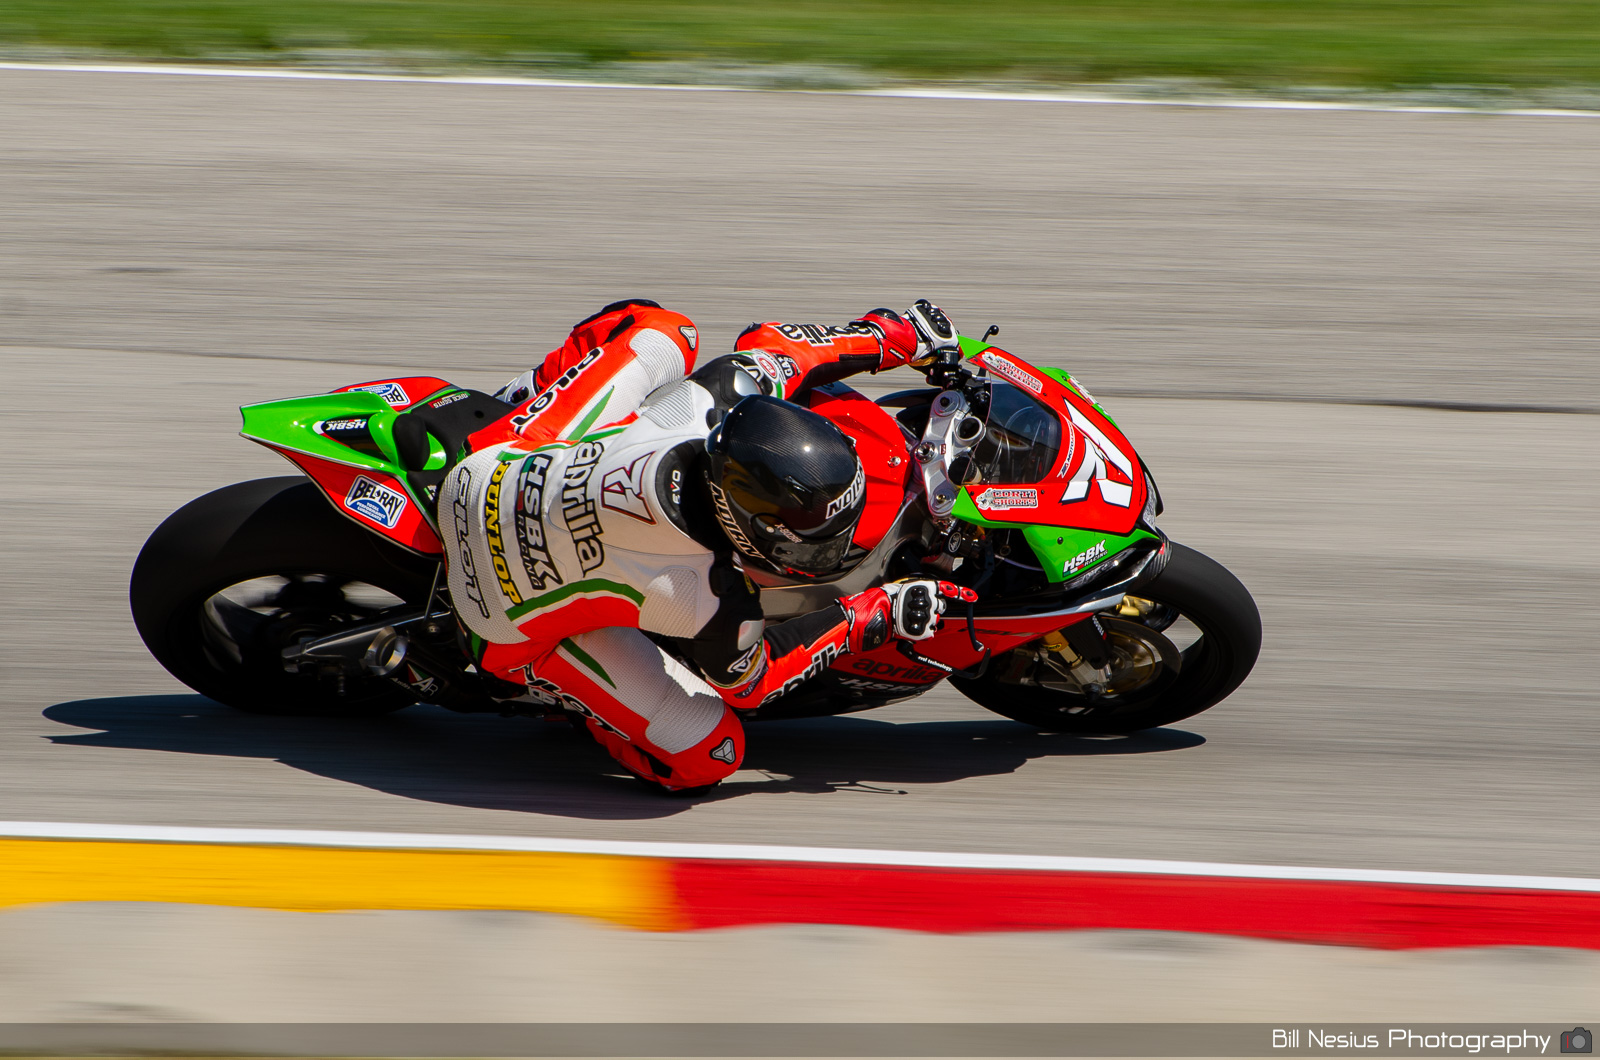 Claudio Corti on the Number 71 HSBK Racing Aprilia / DSC_5685 / 3